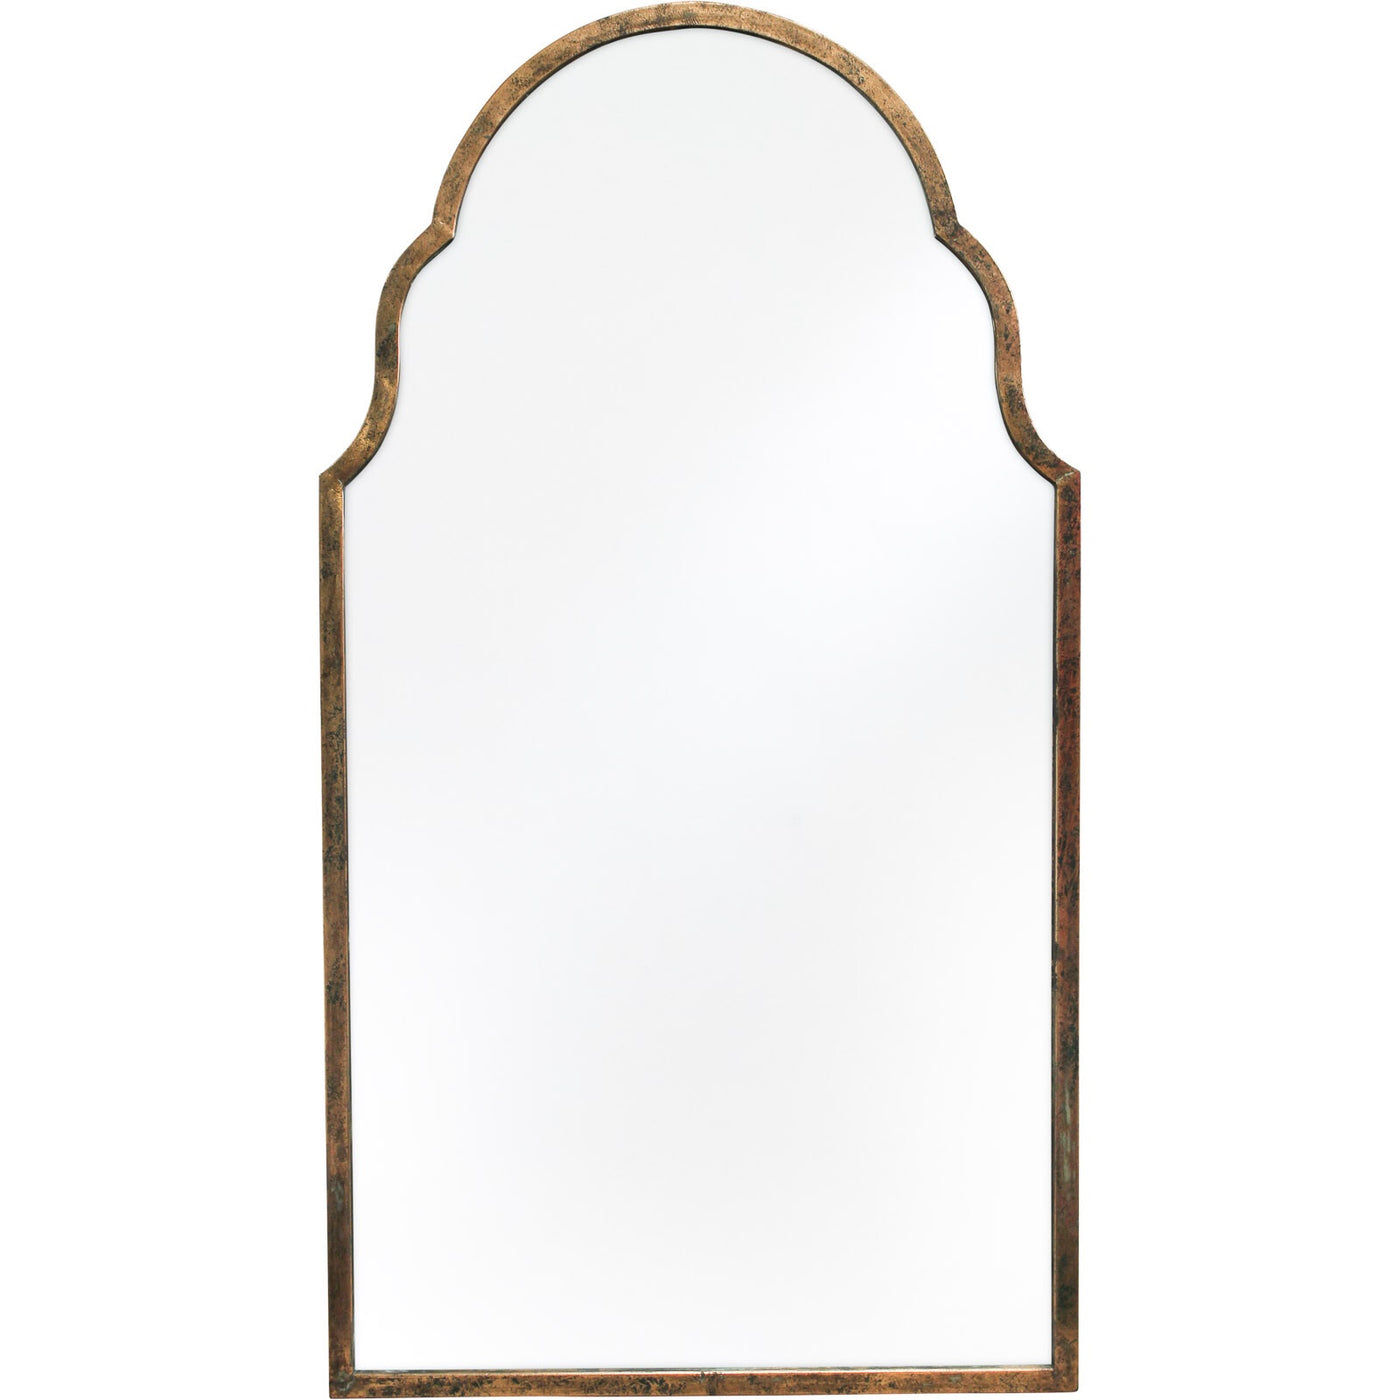 Bazaar Aged Mirror 60 x 110cm